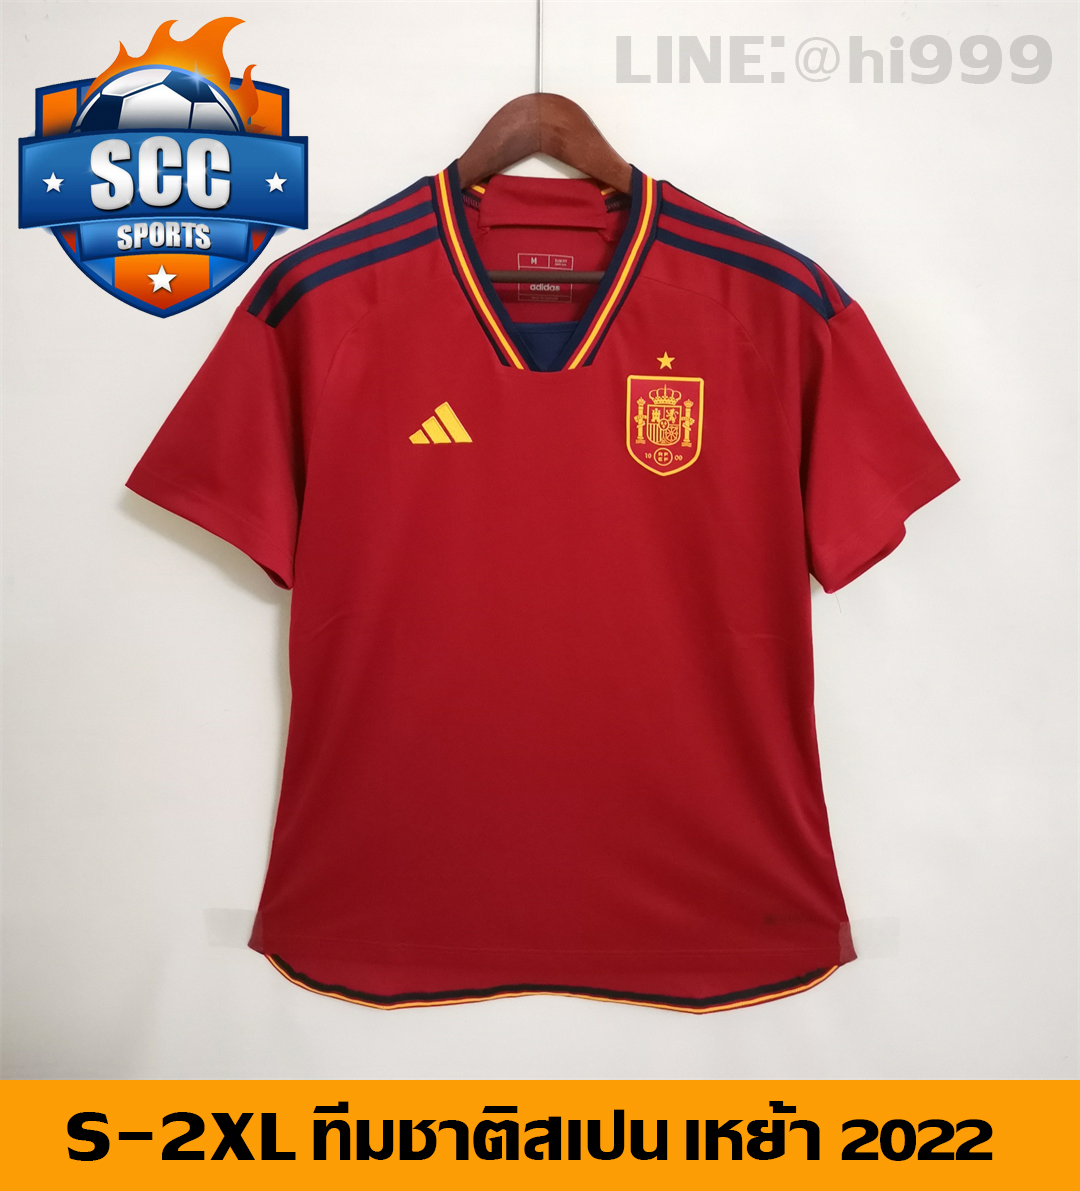 Images/Blog/5Ftmdxpp-เสื้อบอล ทีมชาติสเปน 2022 AAA - SCC SPORTS.jpg